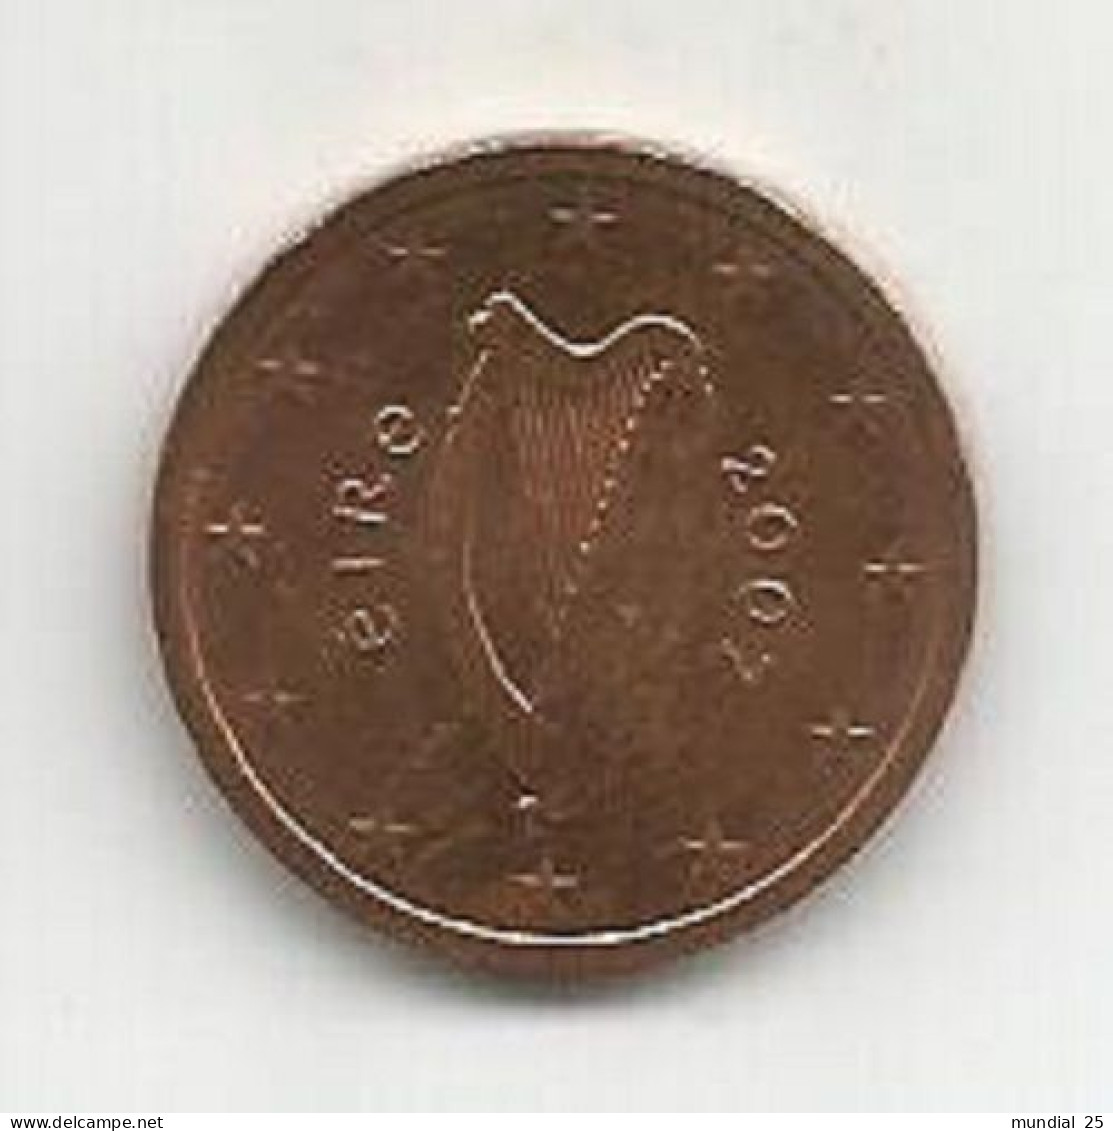 IRELAND 2 EURO CENT 2007 - Irlande